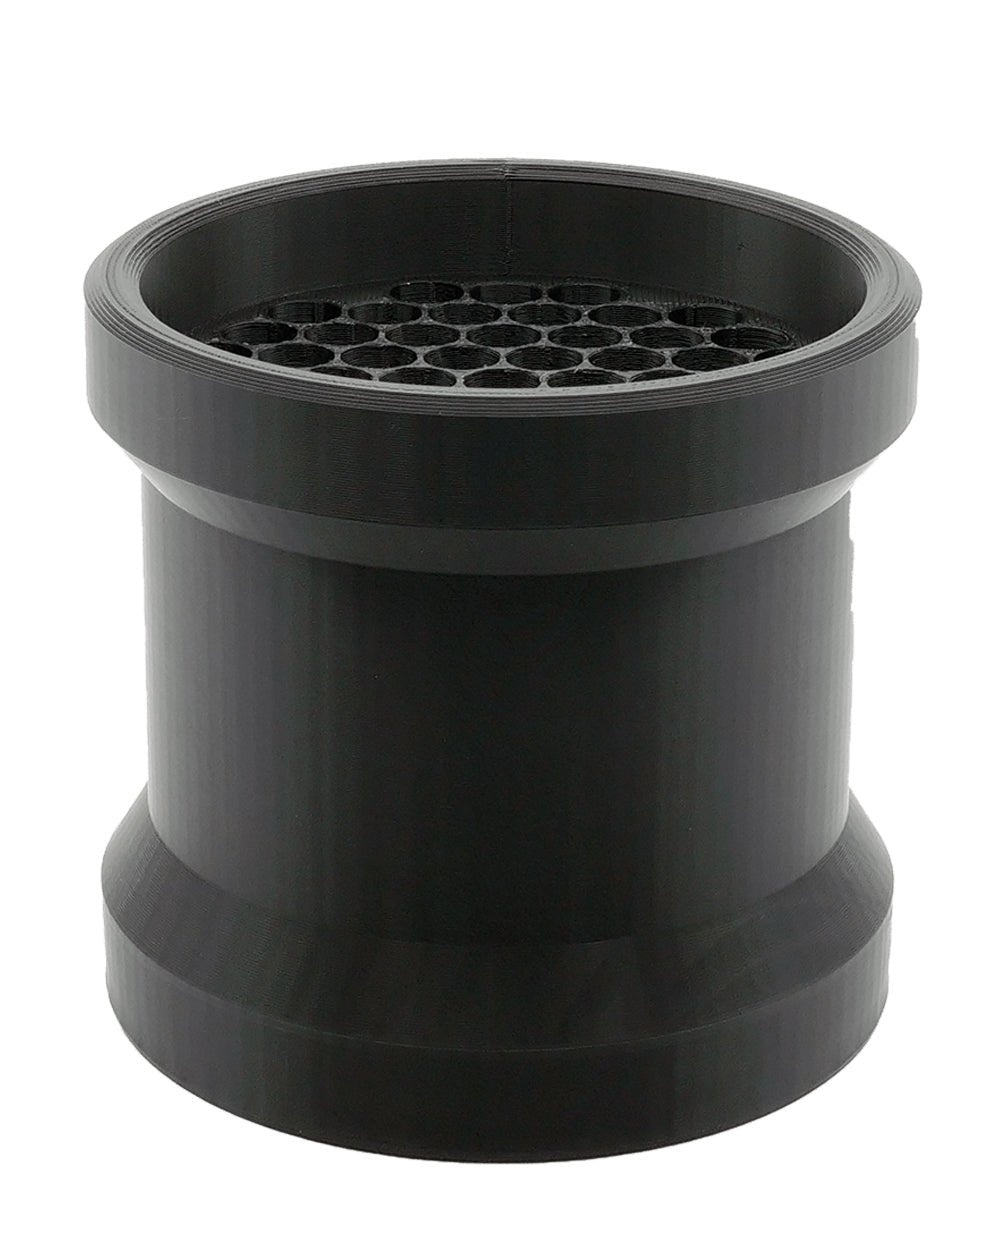 HUMBOLDT | Black Pre-Rolled Cones Filling Machine Cartridge 98mm | Fill 55 Cones Per Run - 1